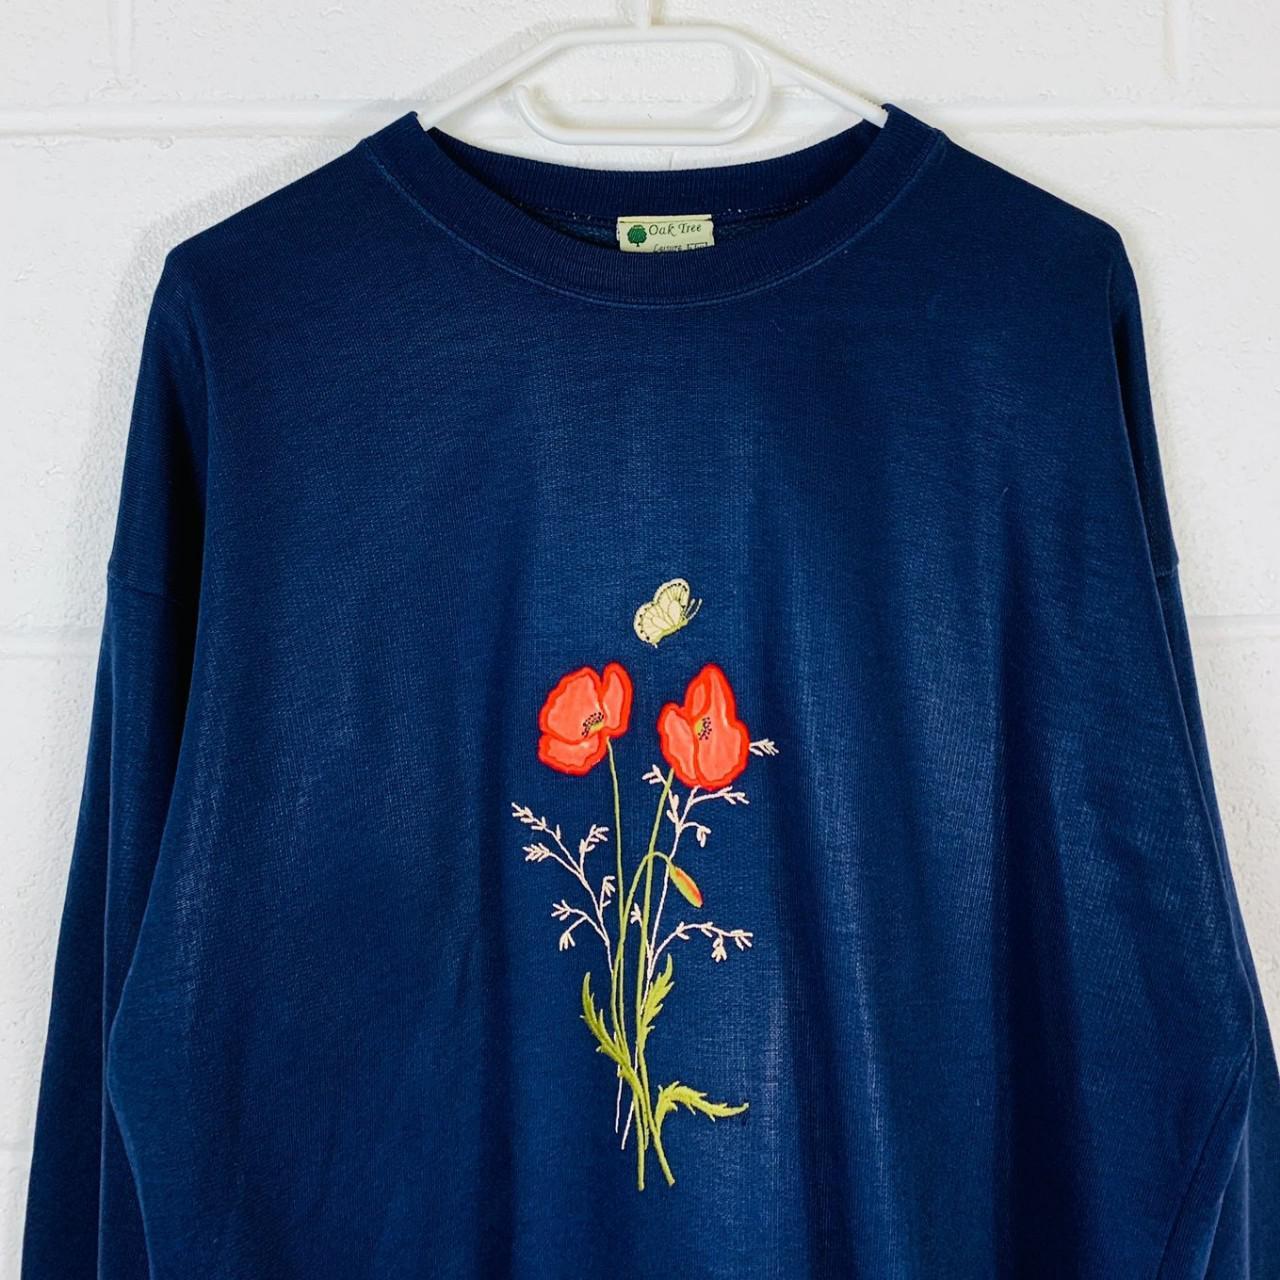 Product Image 1 - Vintage 90s Sweatshirt 

Blue with